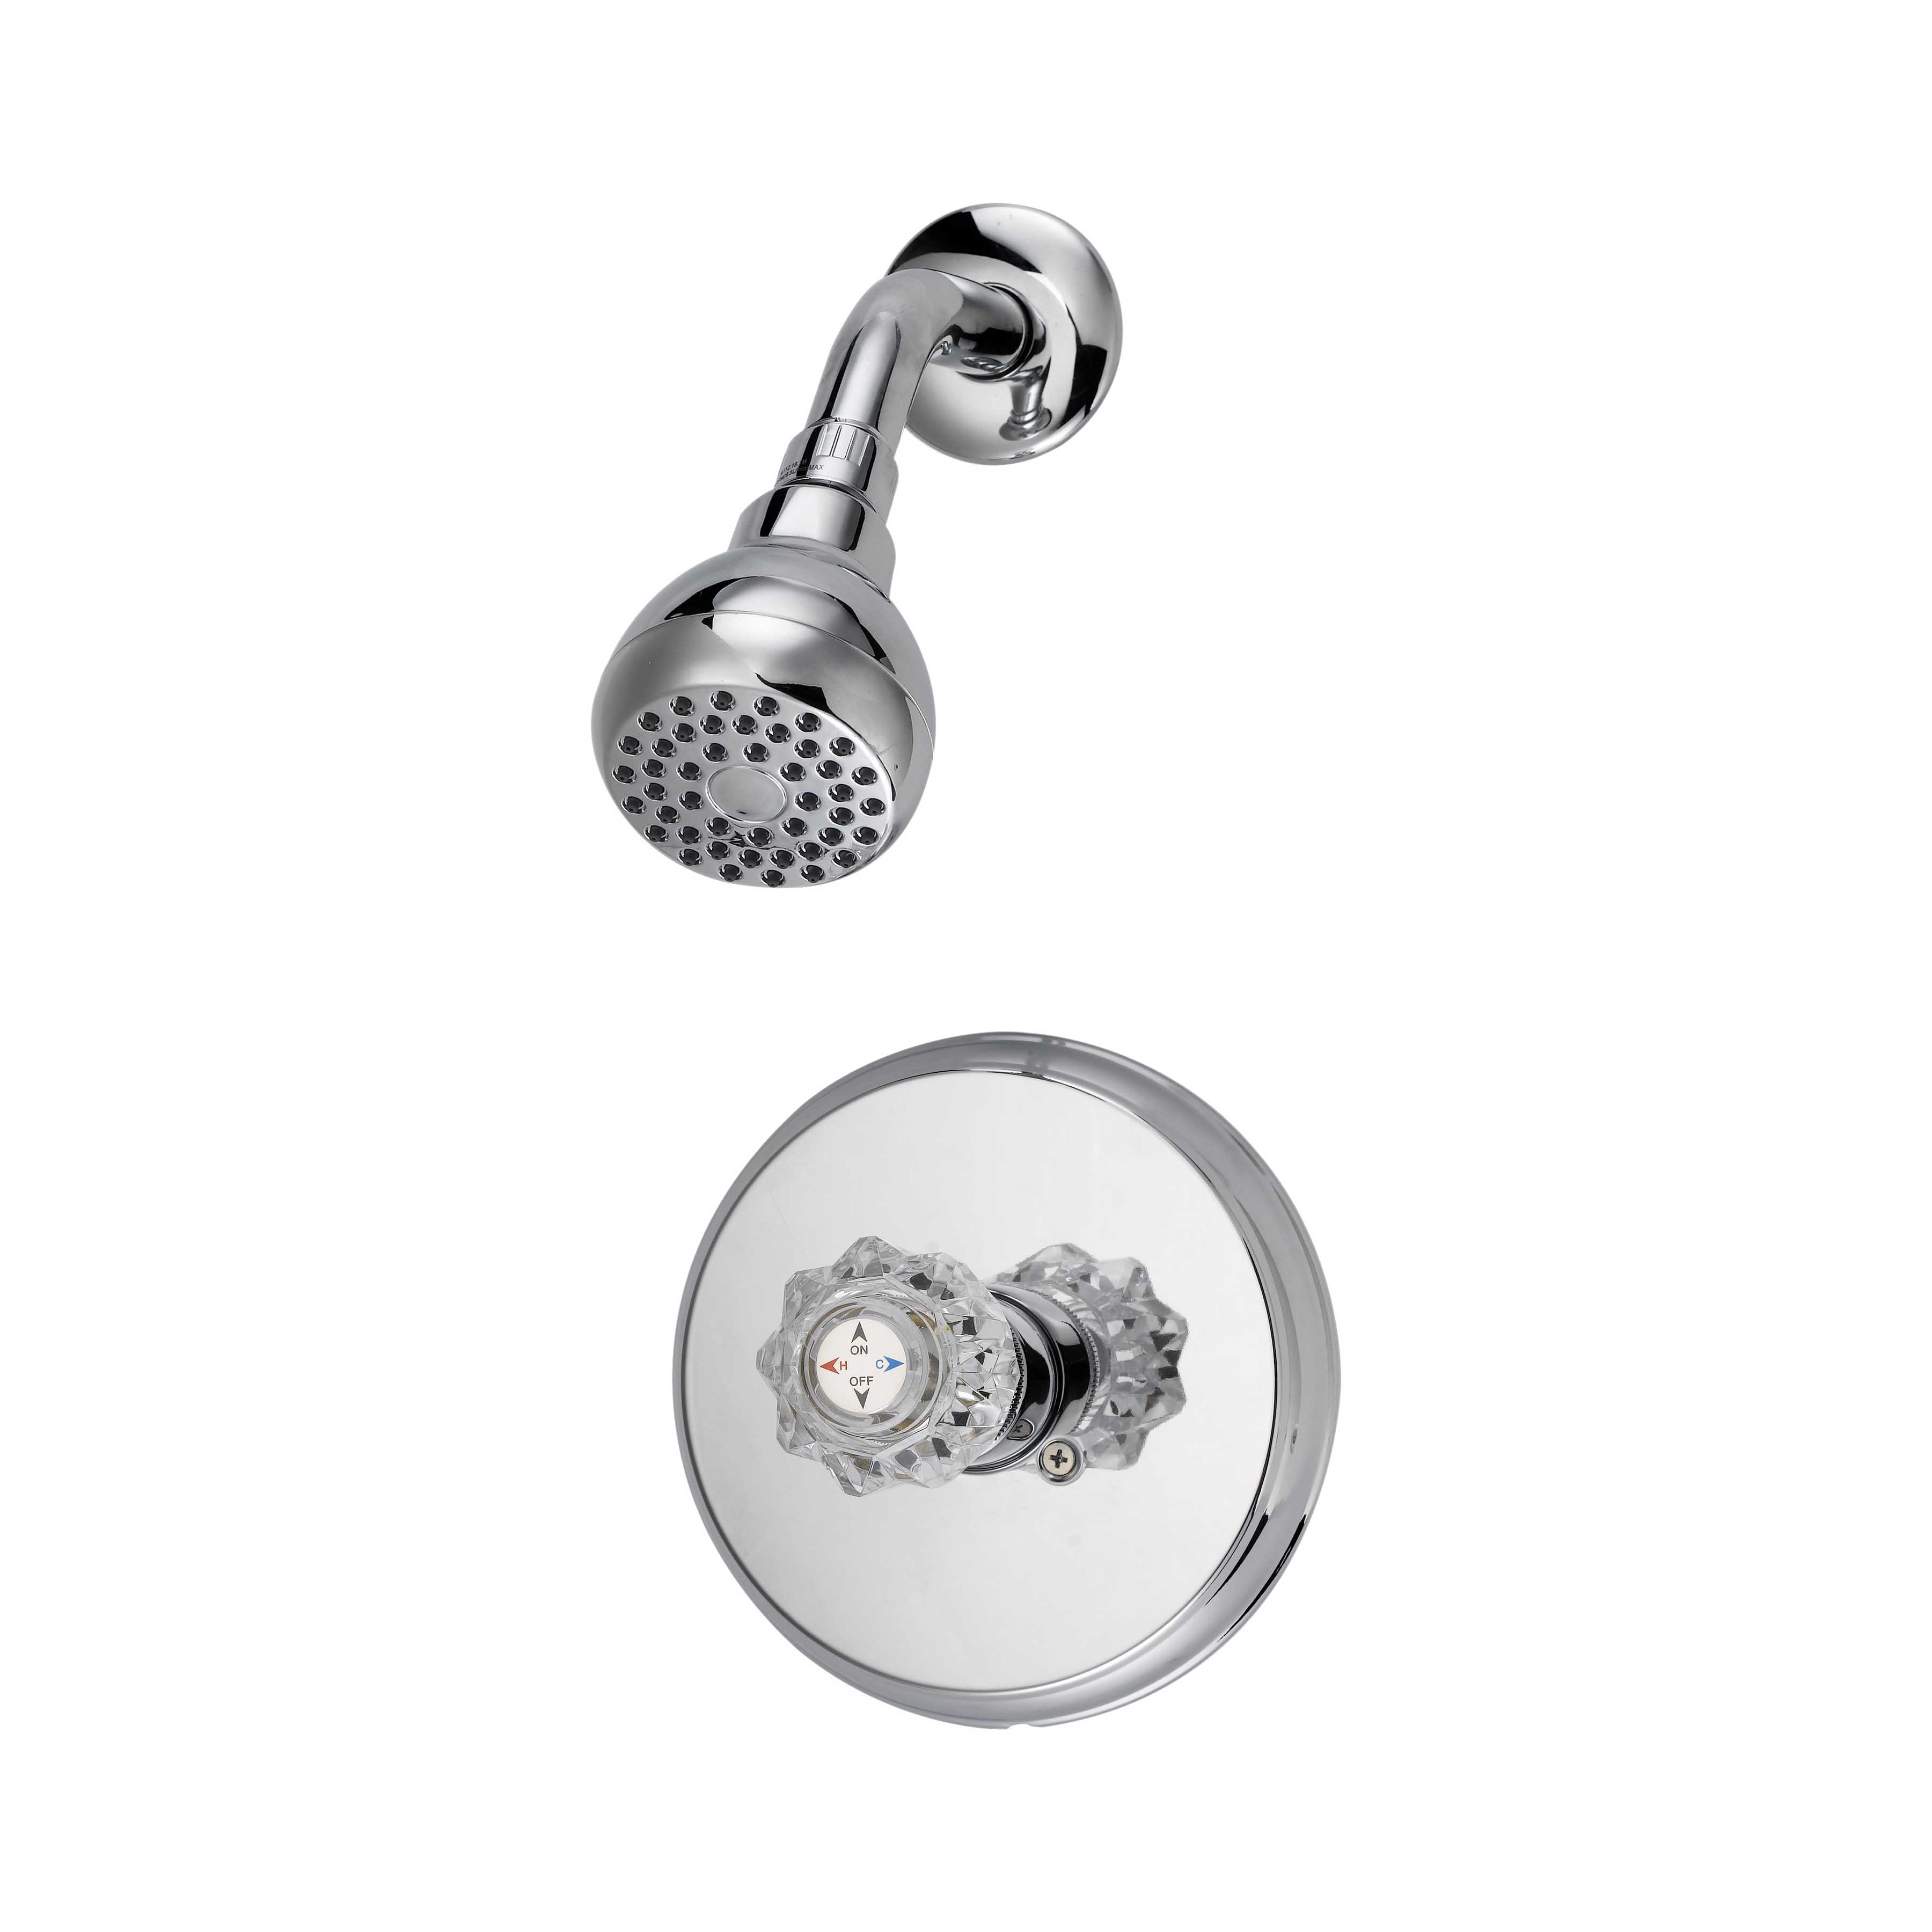 GU-F1010207CP Shower Faucet, 1.75 gpm, 2.75 in Showerhead, Metal/Plastic, Round Showerhead, Knob Handle